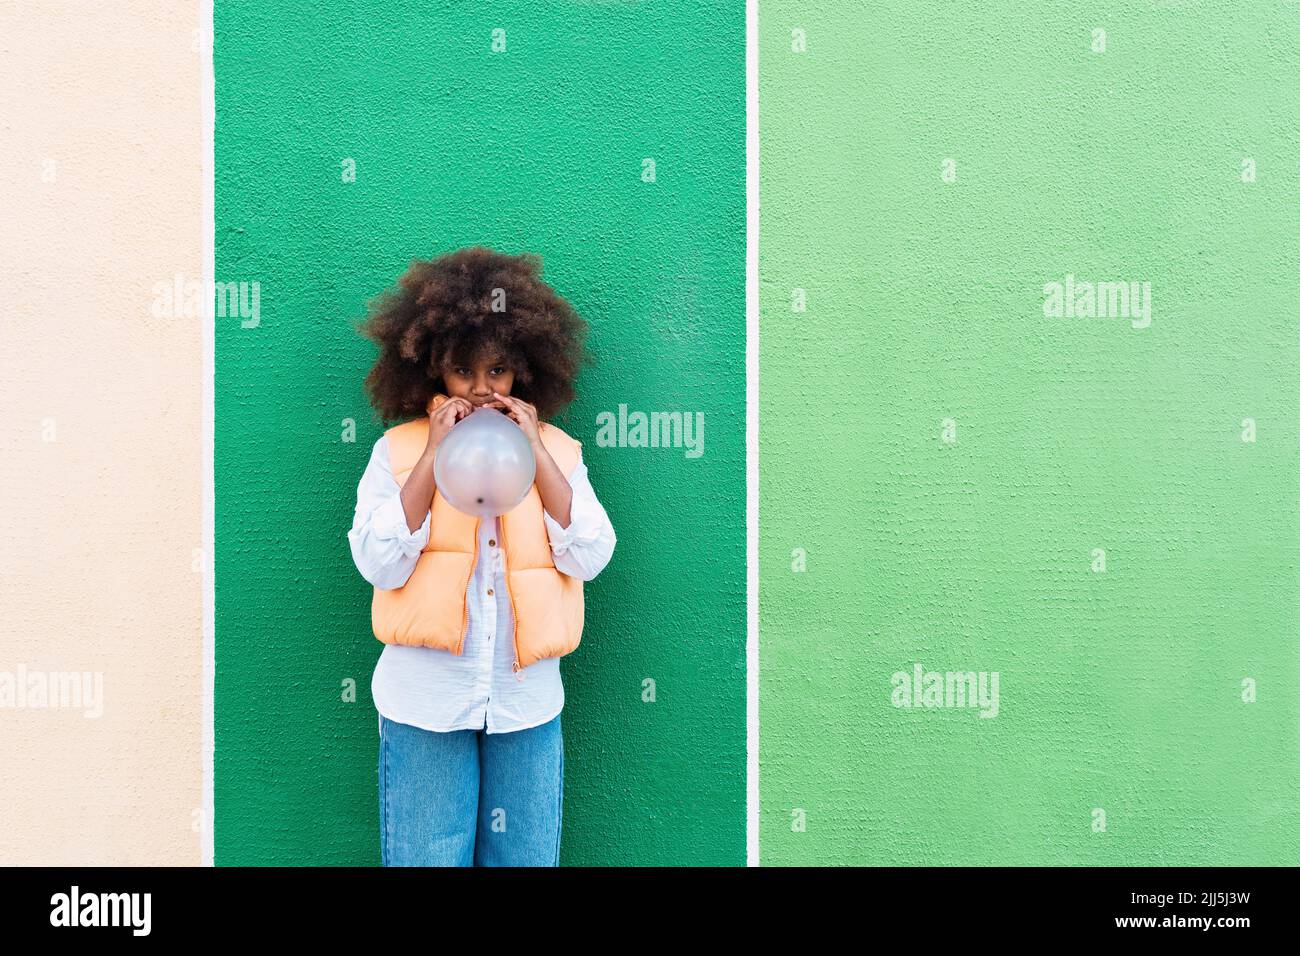 Mädchen bläst Ballon vor der grünen Wand stehen Stockfoto